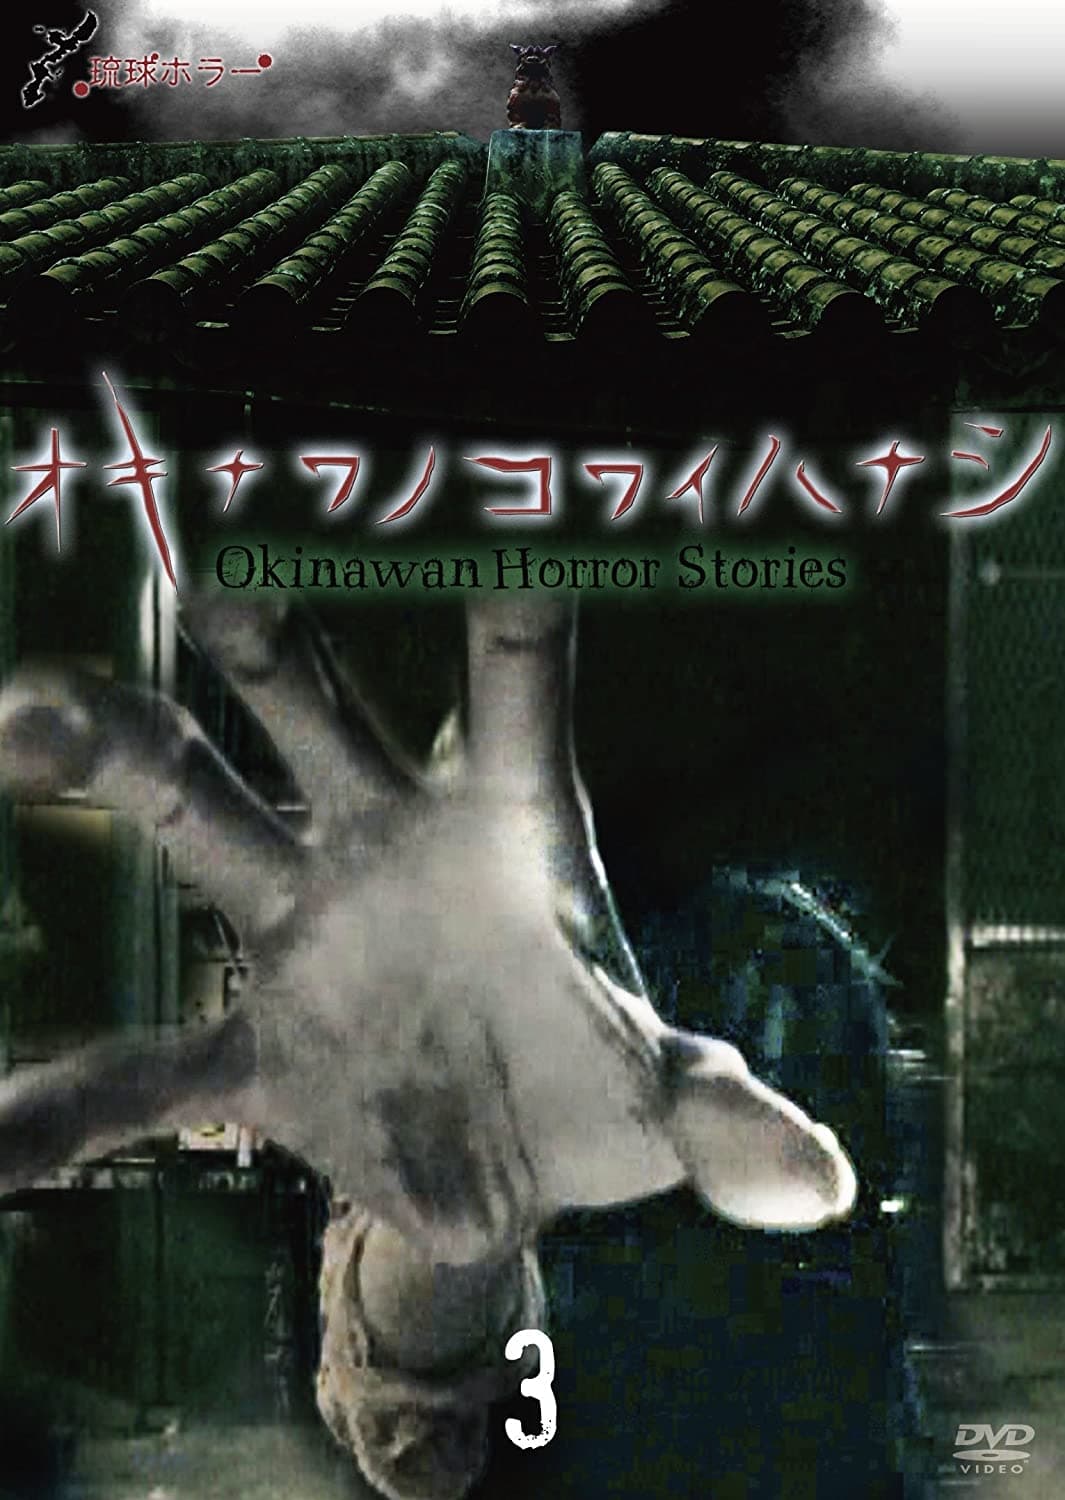 Okinawan Horror Stories 3